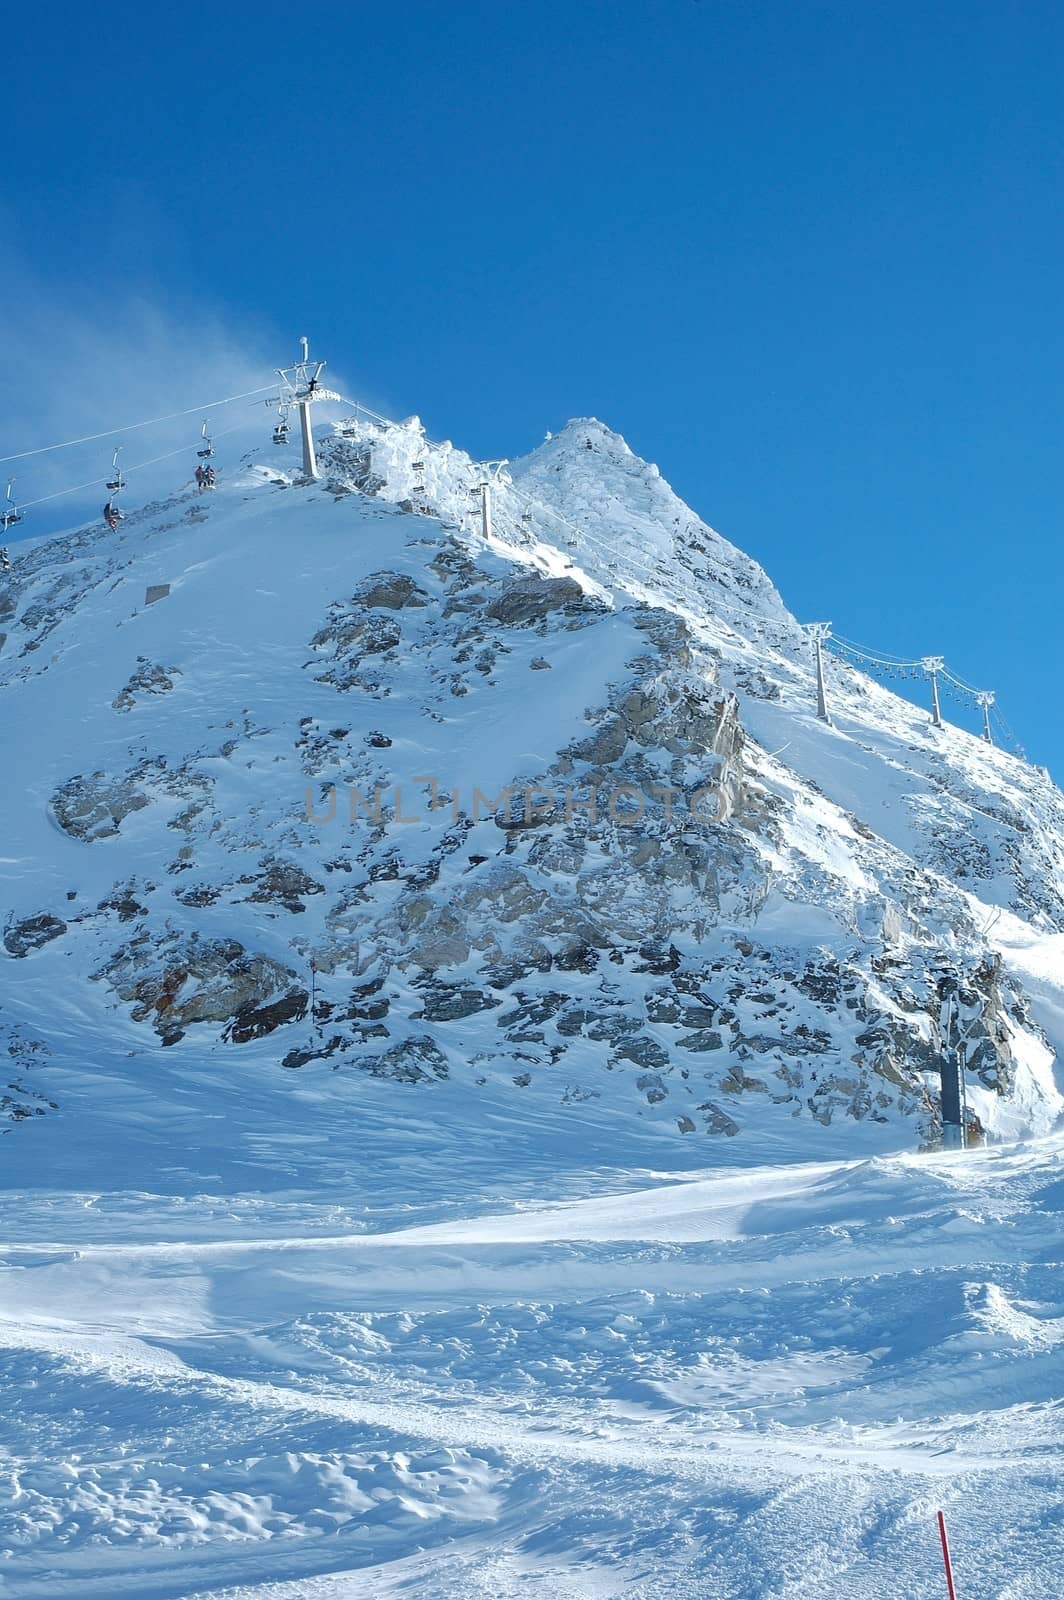 Peak and ski lift nearby Hintertux in Zillertal valley in Austria